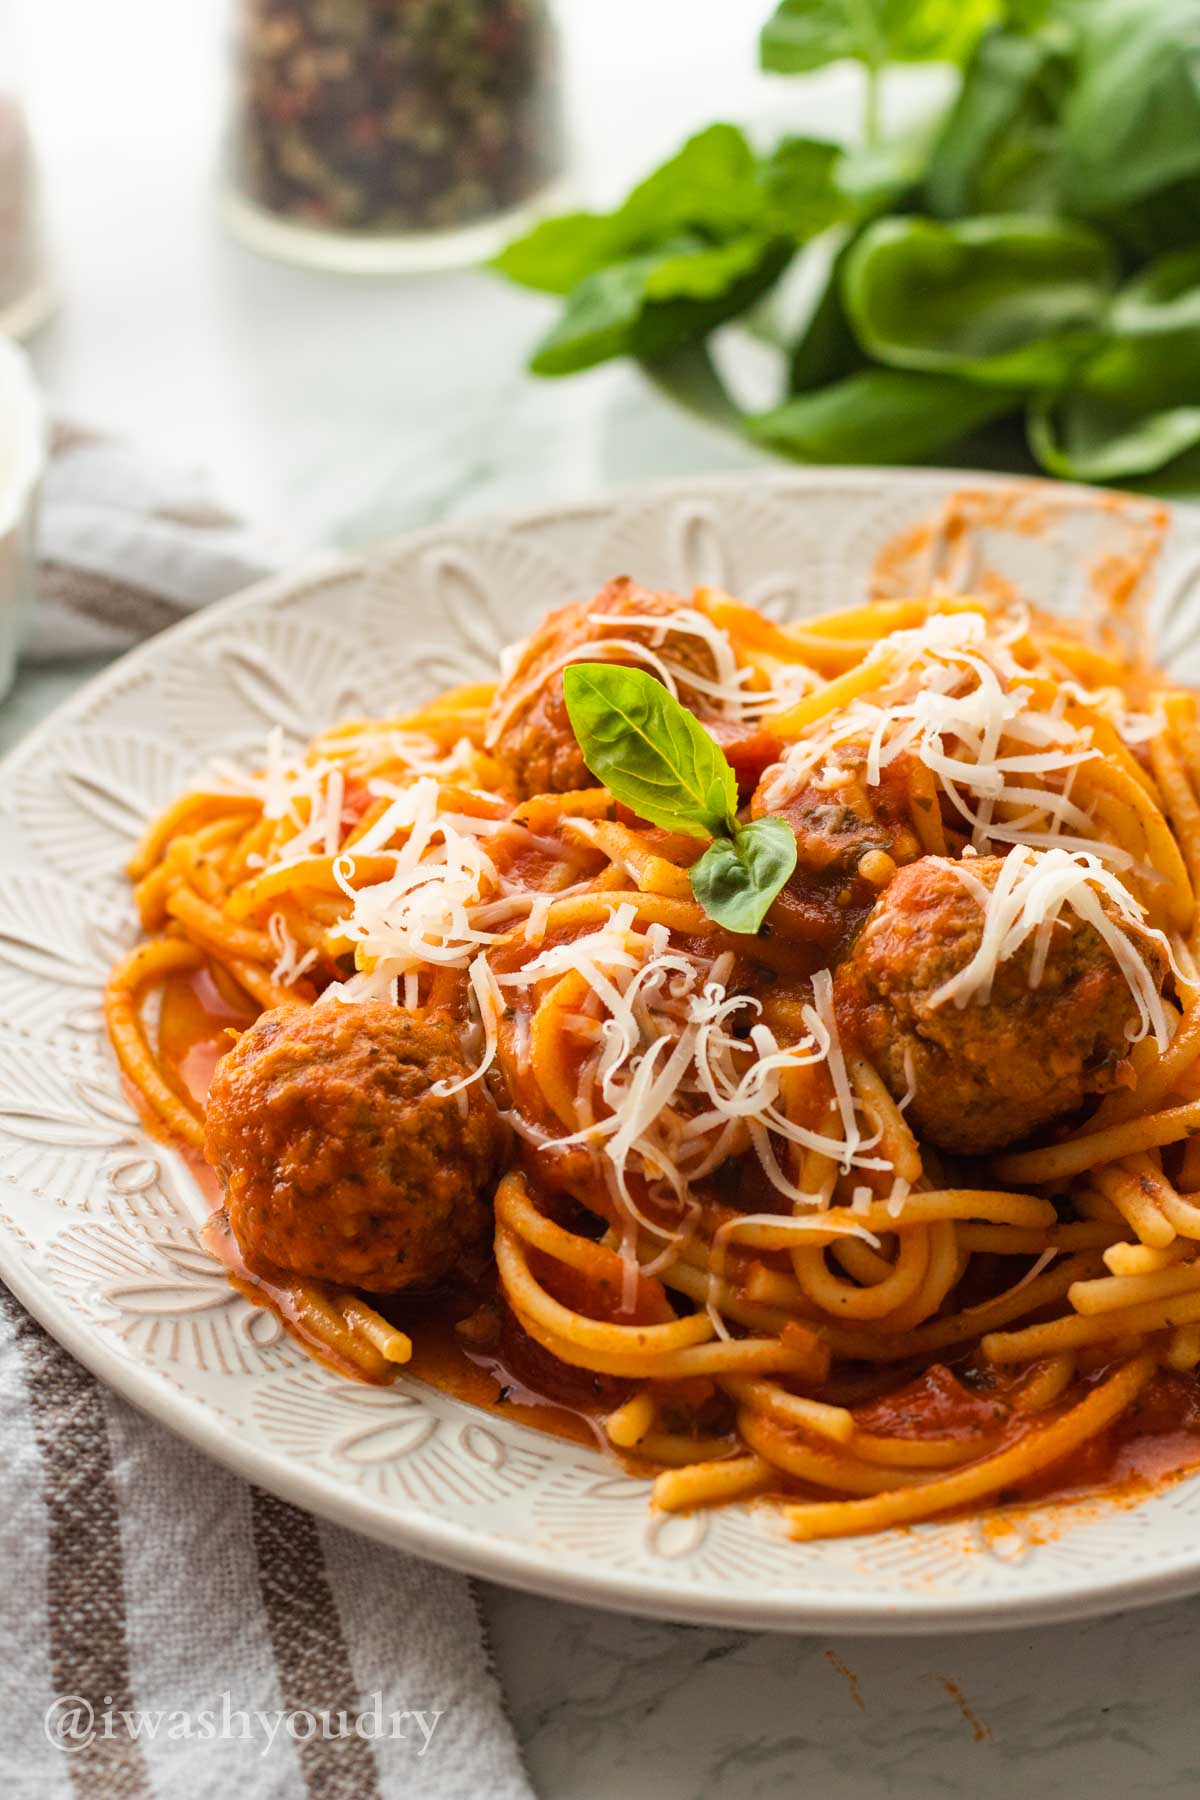 https://iwashyoudry.com/wp-content/uploads/2019/04/Instant-Pot-Spaghetti-Meatballs-plated-3.jpg